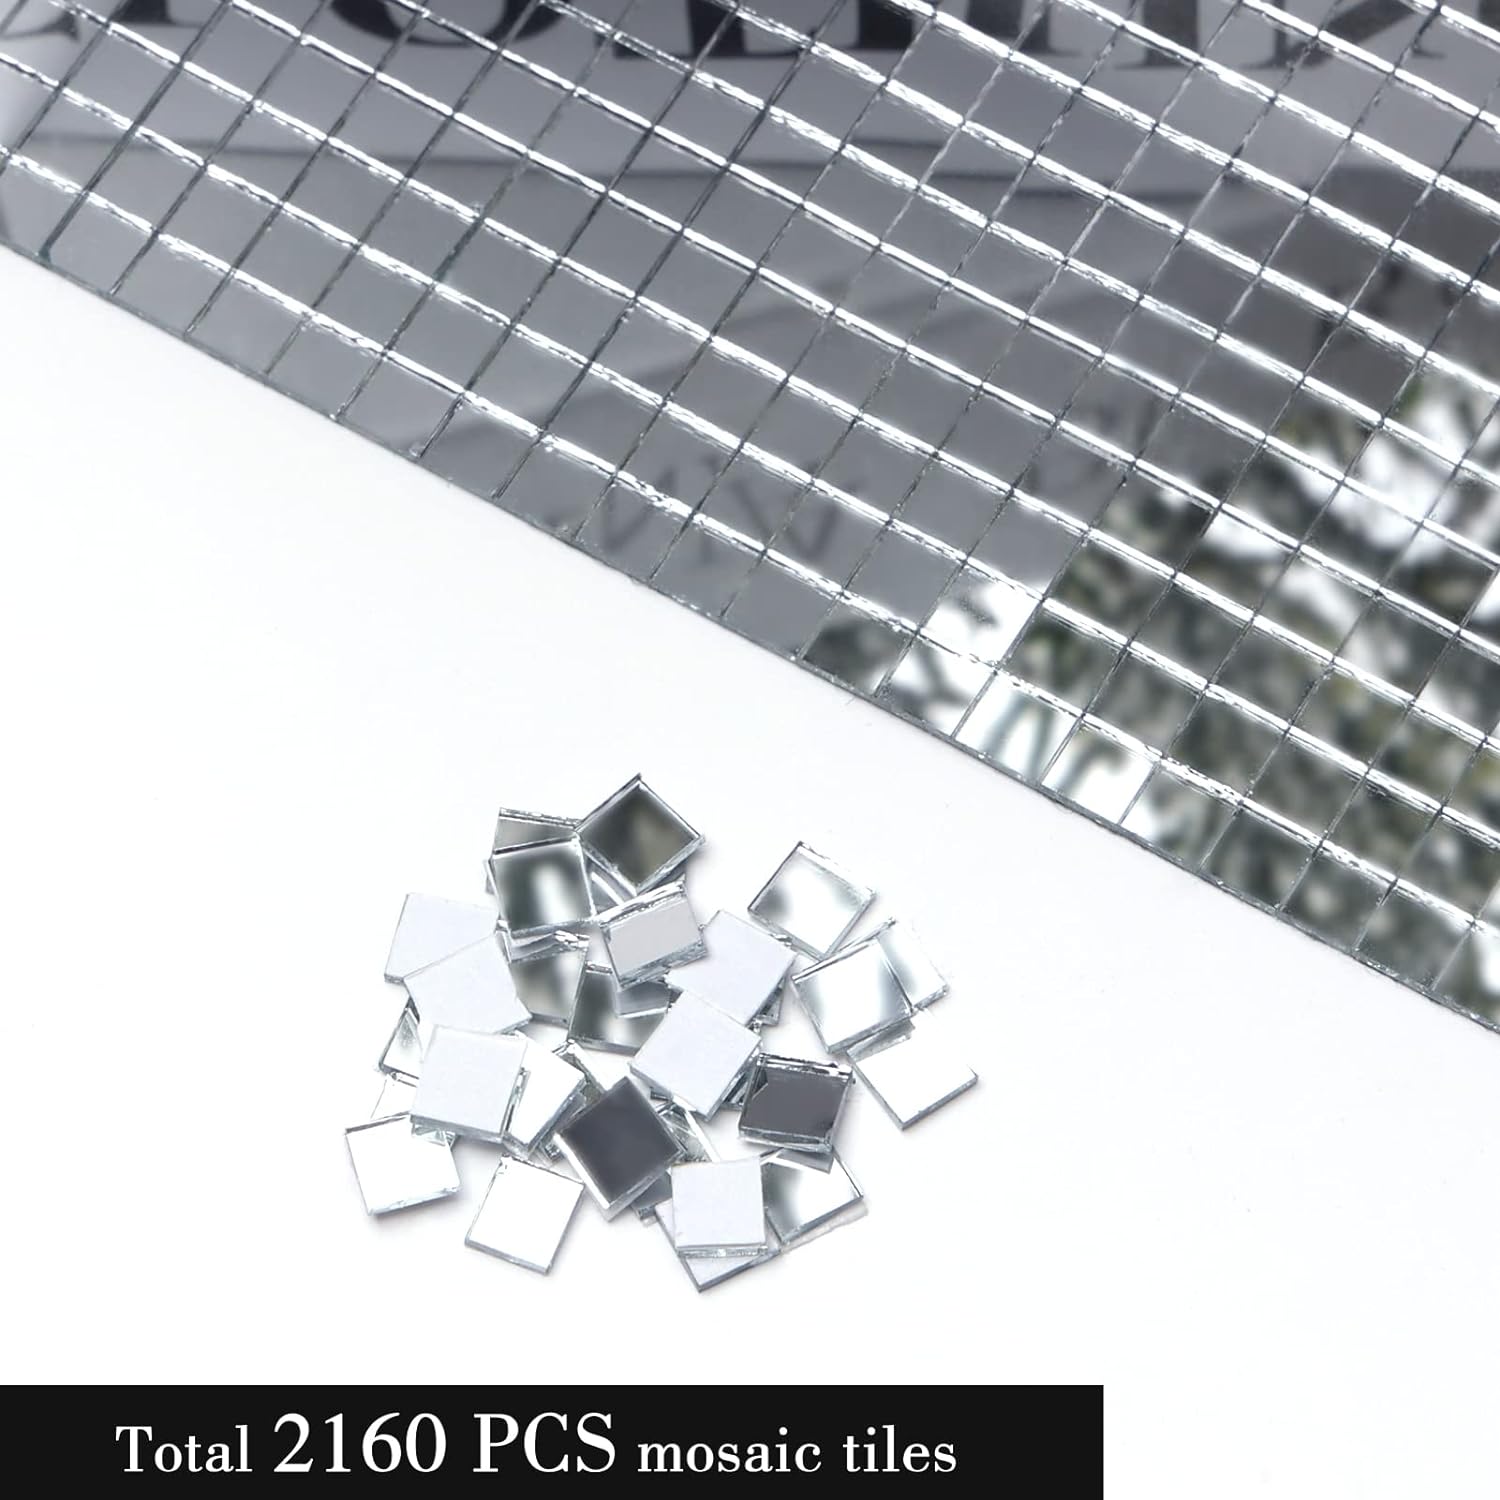 Generic PP OPOUNT 2160 PCS Disco Ball Tiles, Self-Adhesive Mirror